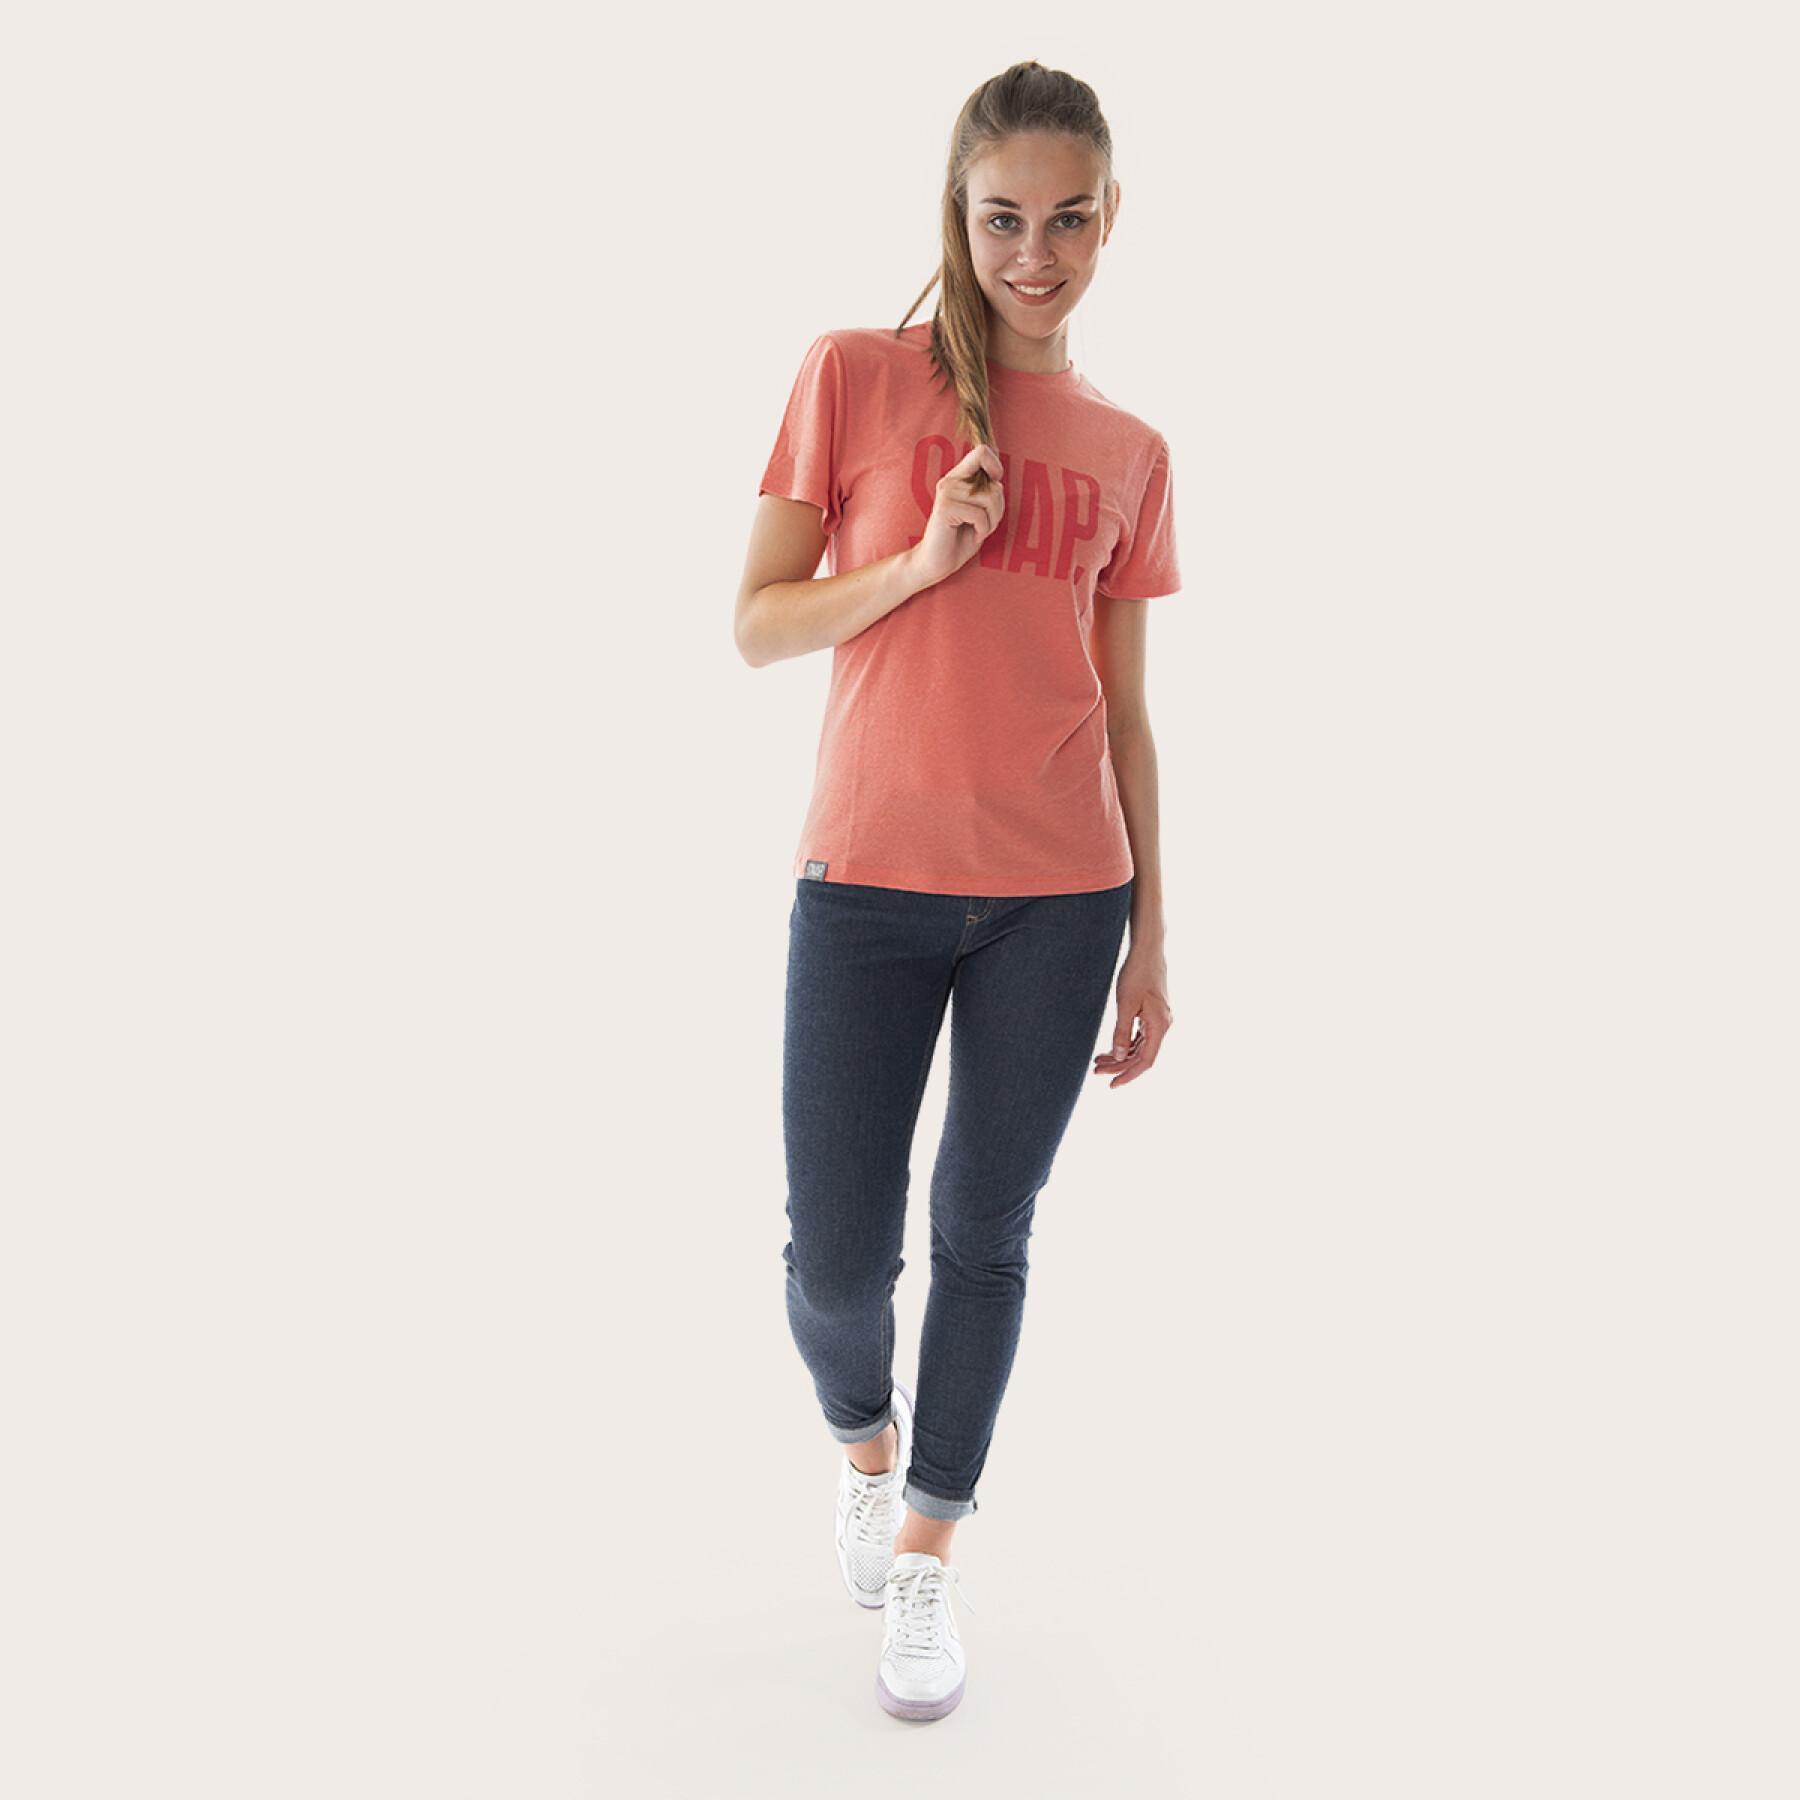 T-shirt technique en merinos manches courtes femme Snap Climbing